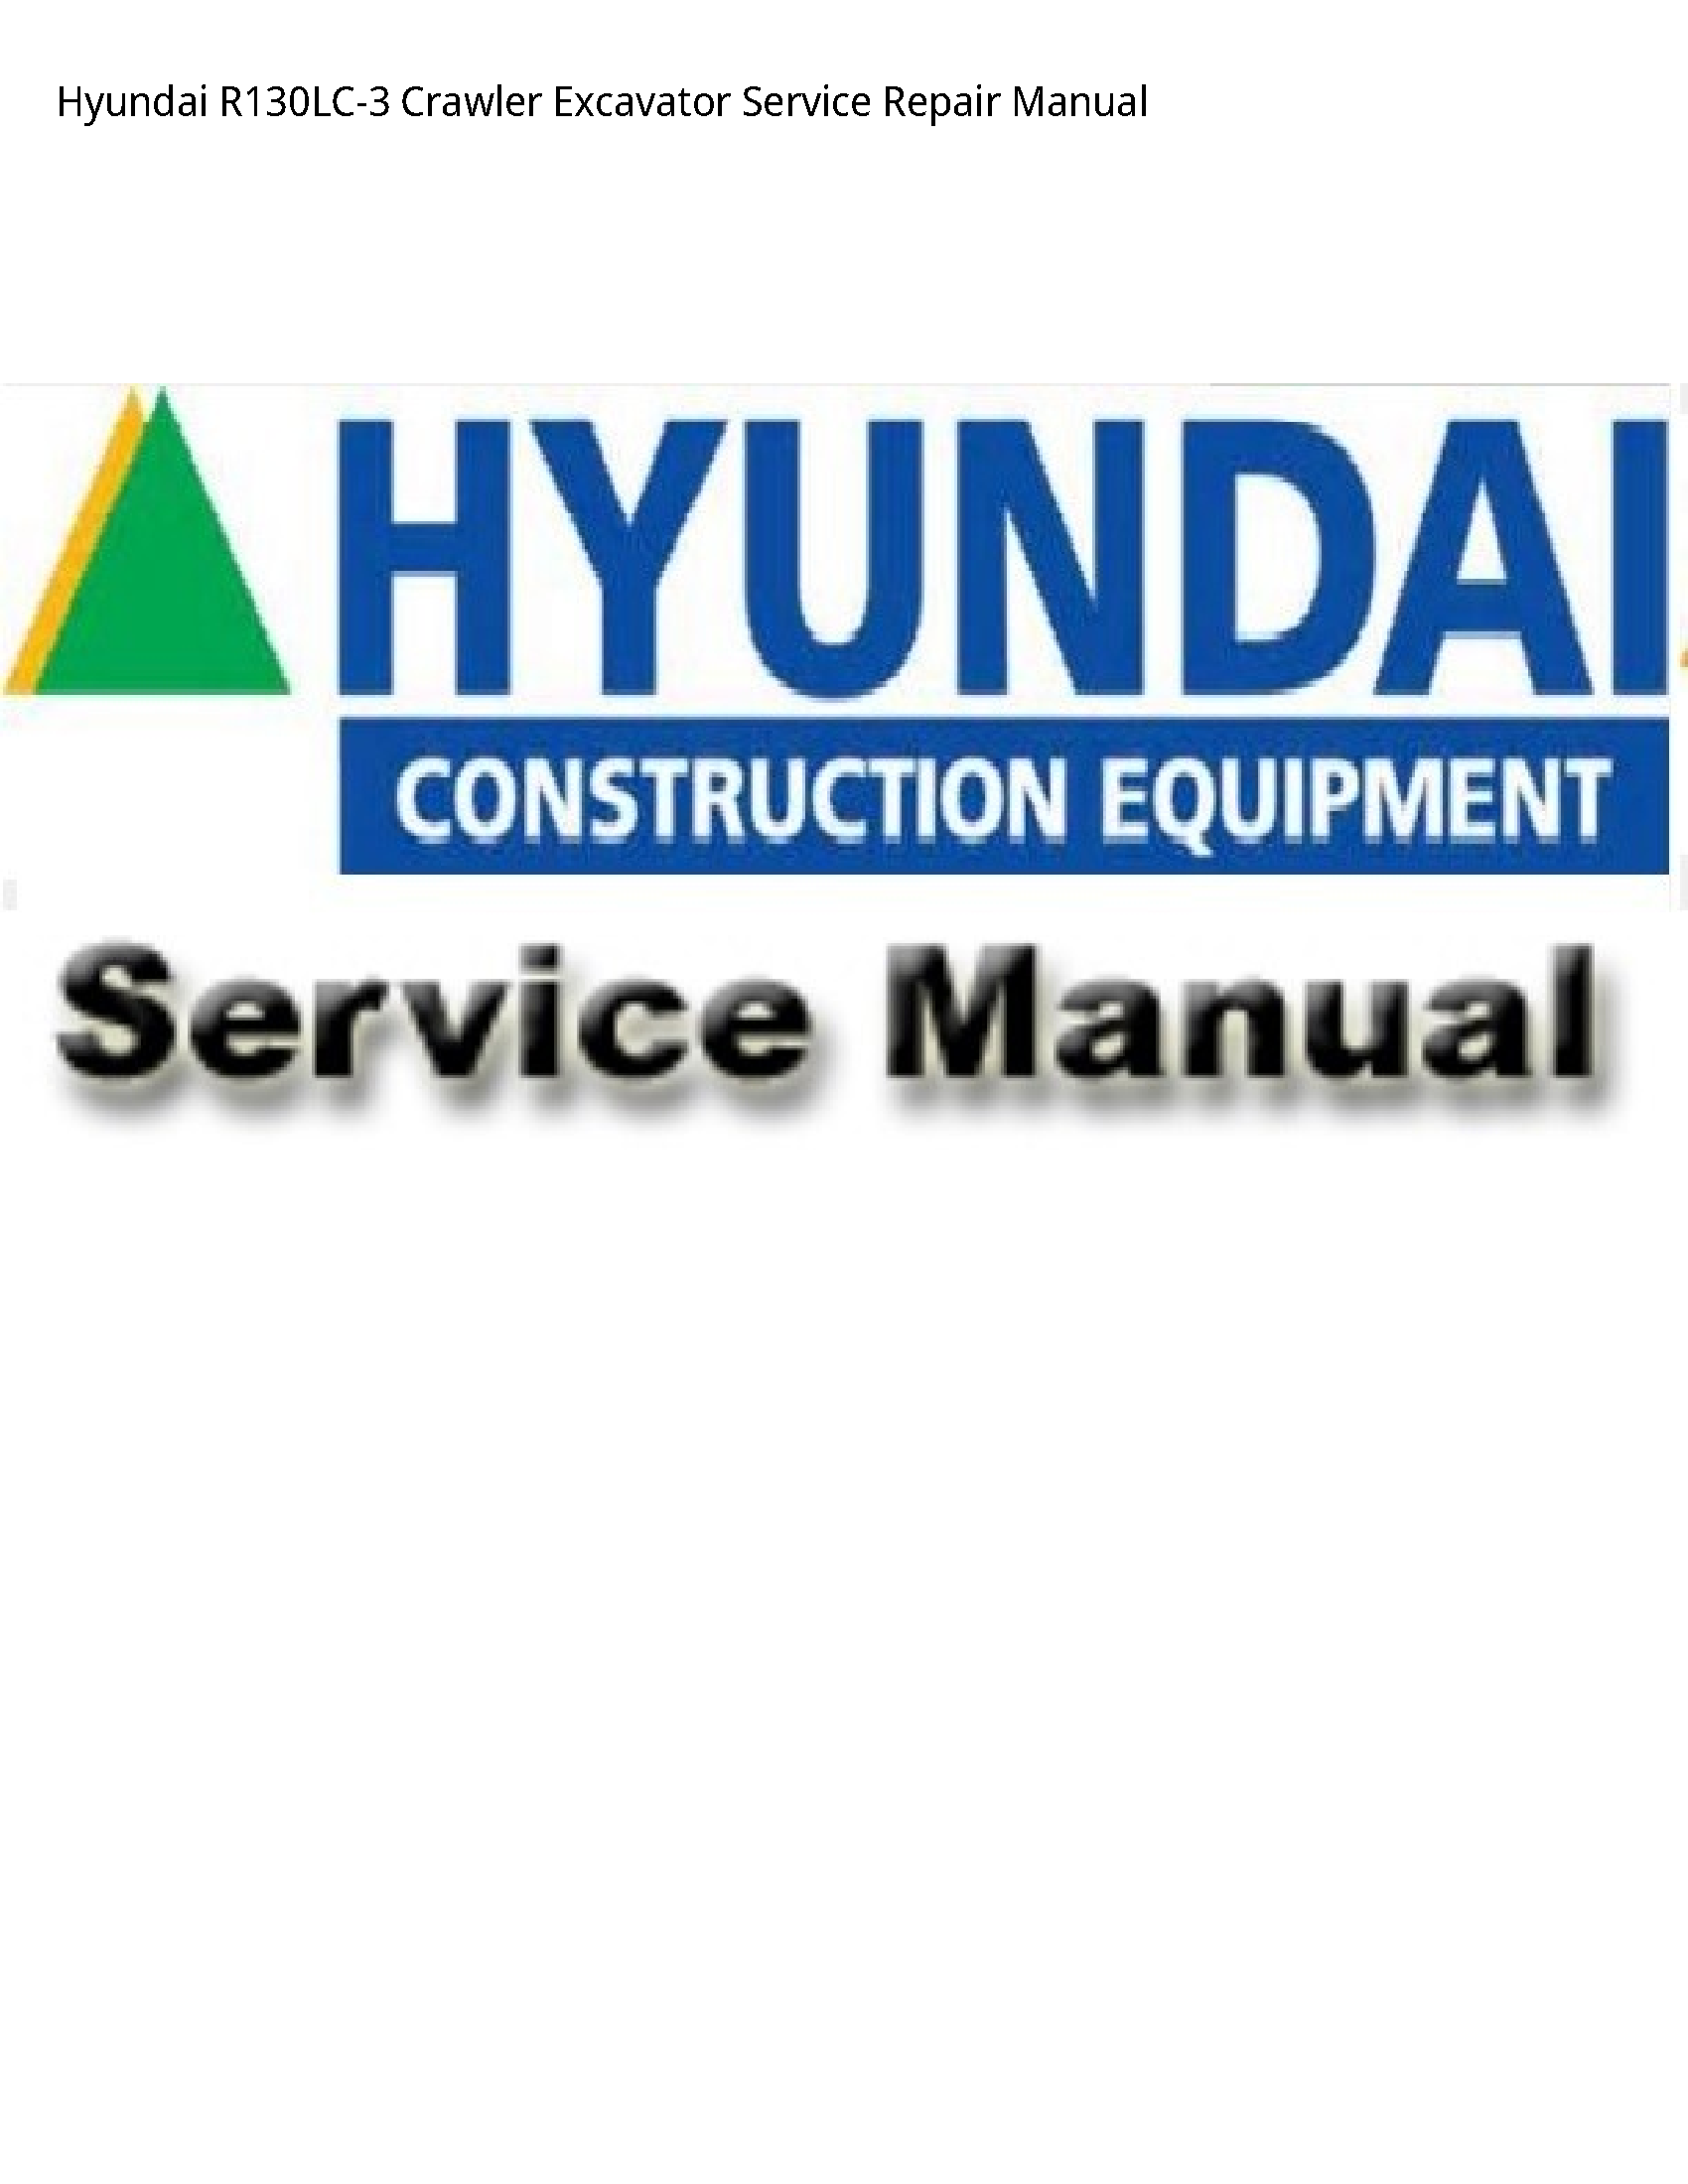 Hyundai R130LC-3 Crawler Excavator manual